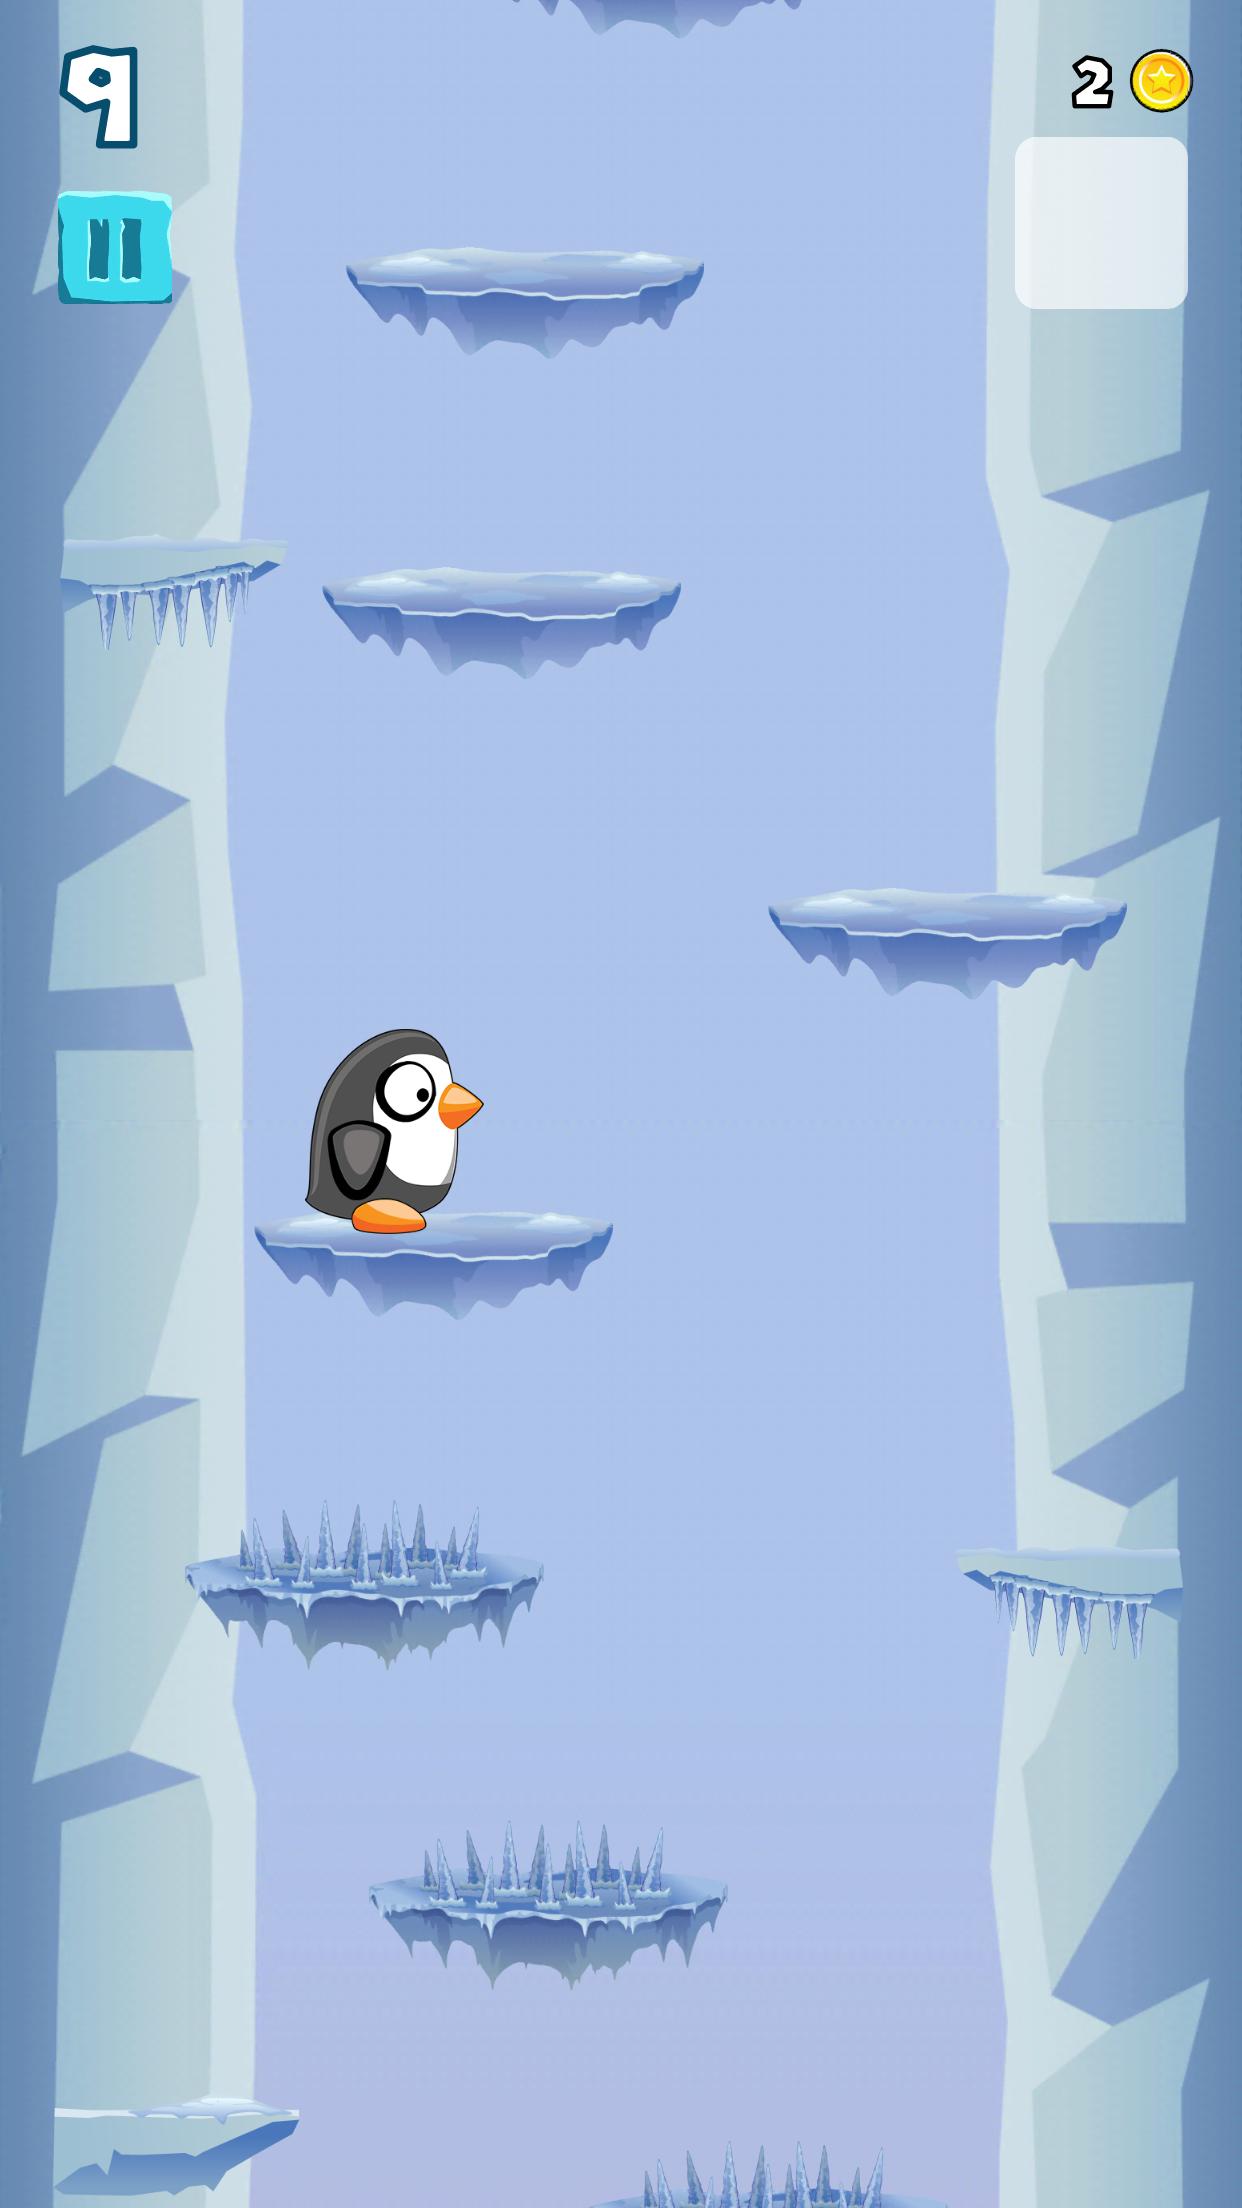 Игра пингвина битой. Игра Penguin Jump. Игра пингвины на льдинах. Игра Пингвин прыгает по льдинам. Пингвин прыгает по льдинам.